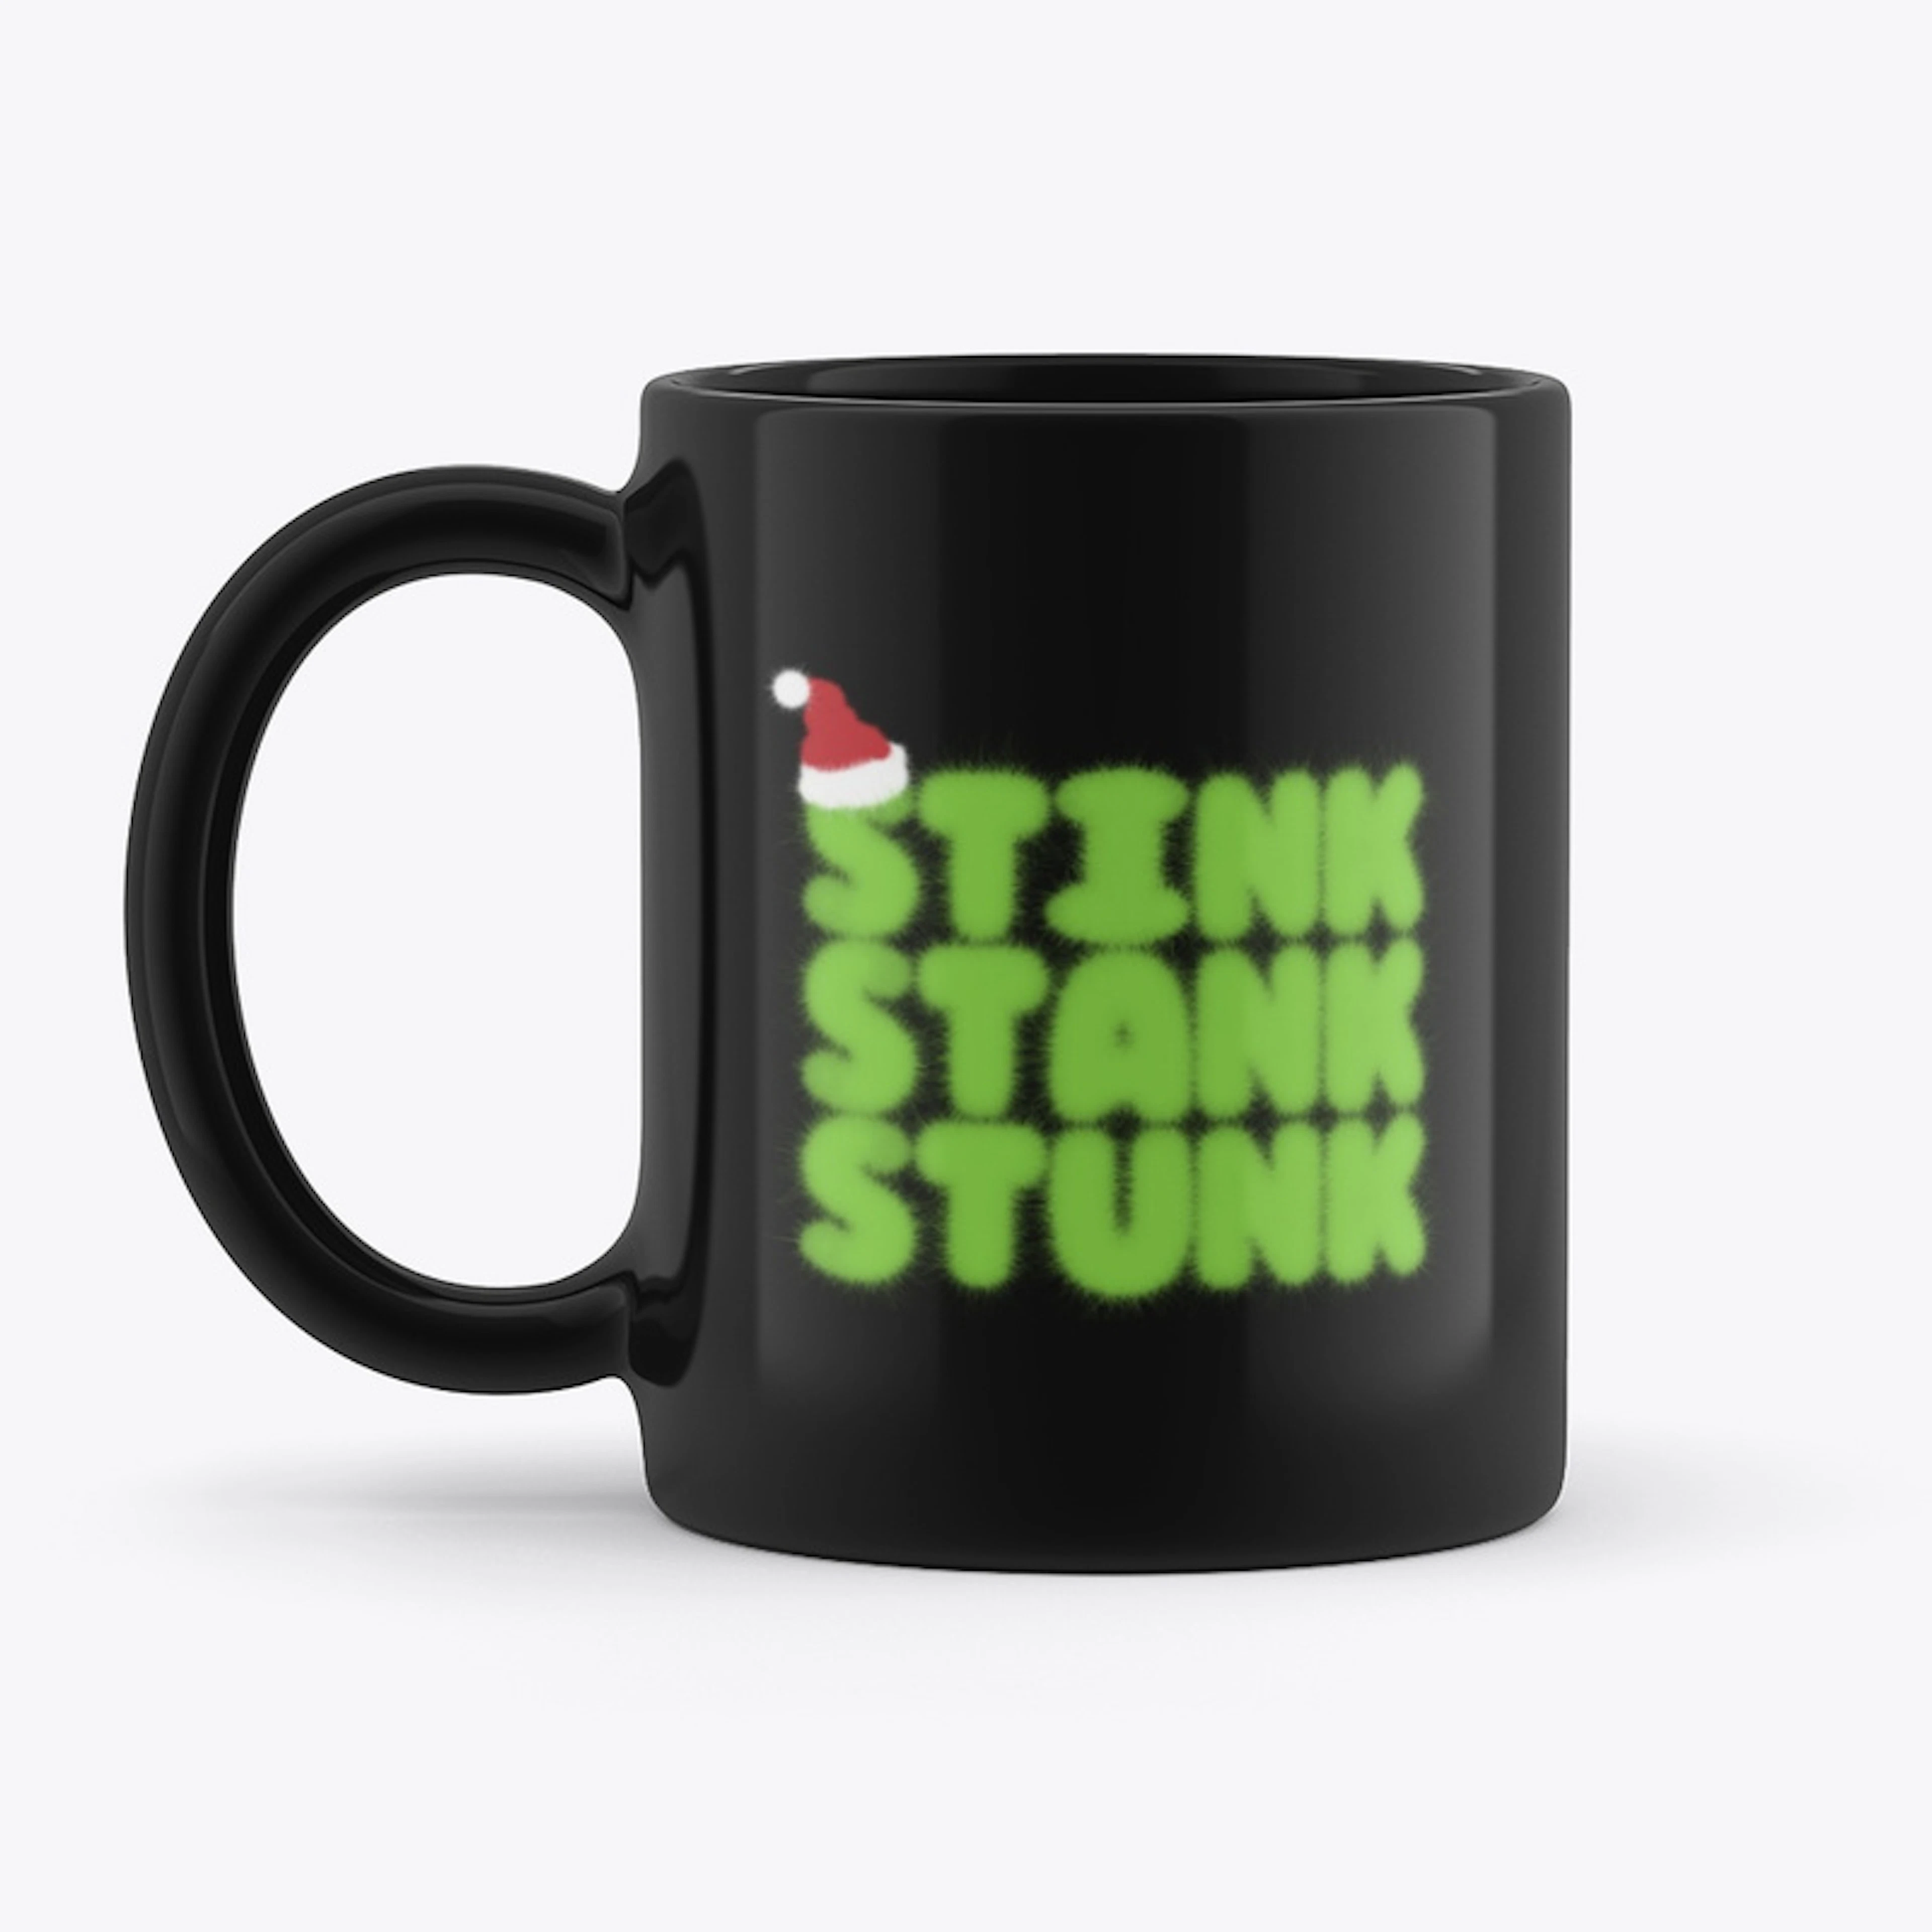 Christmas Mug Stink Stank Stunk